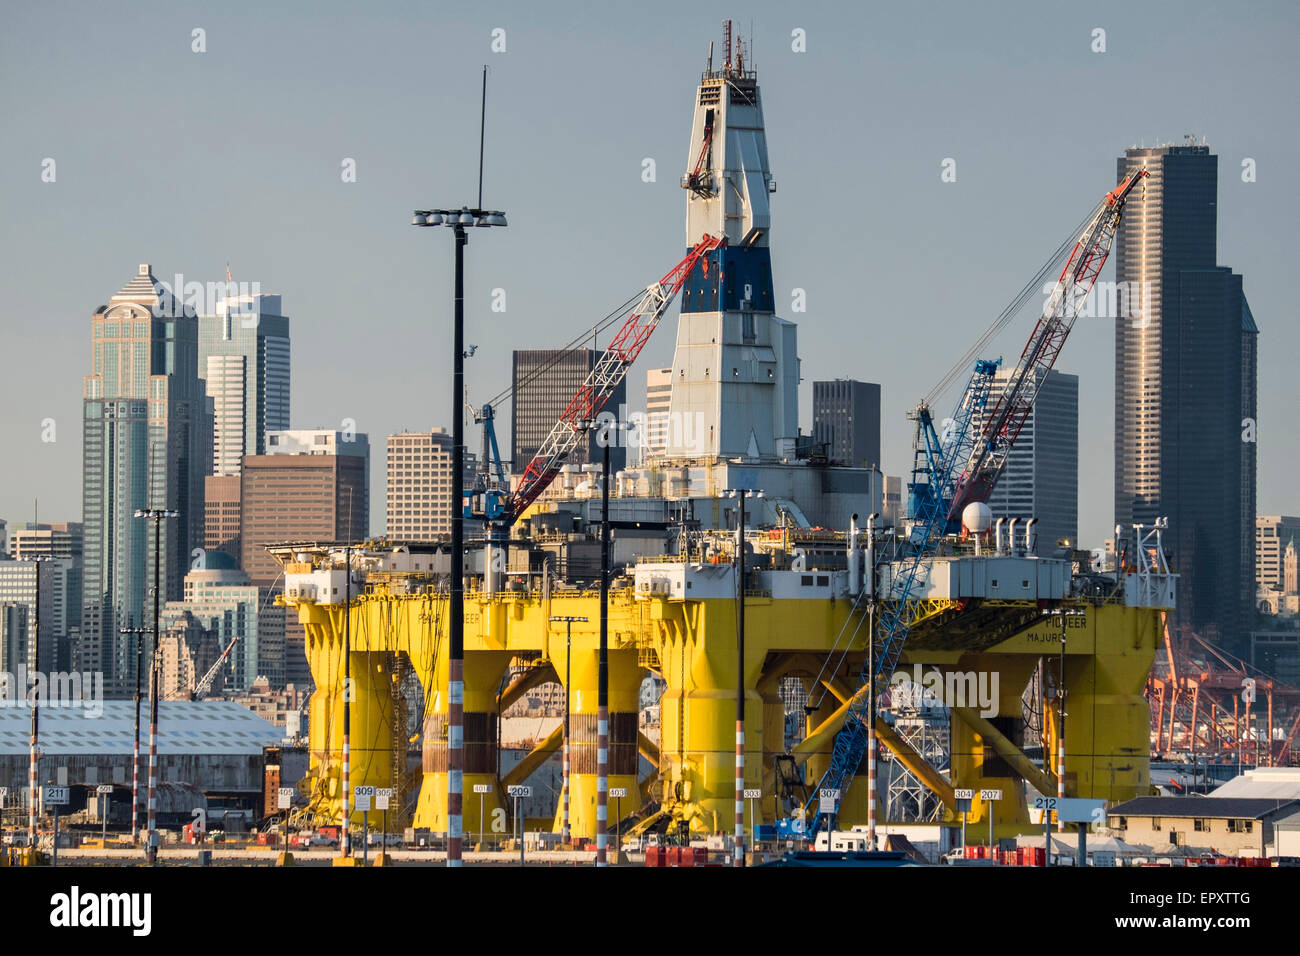 United States, Washington, Seattle, Shell Oil Company floating oil rilling platform Stock Photo